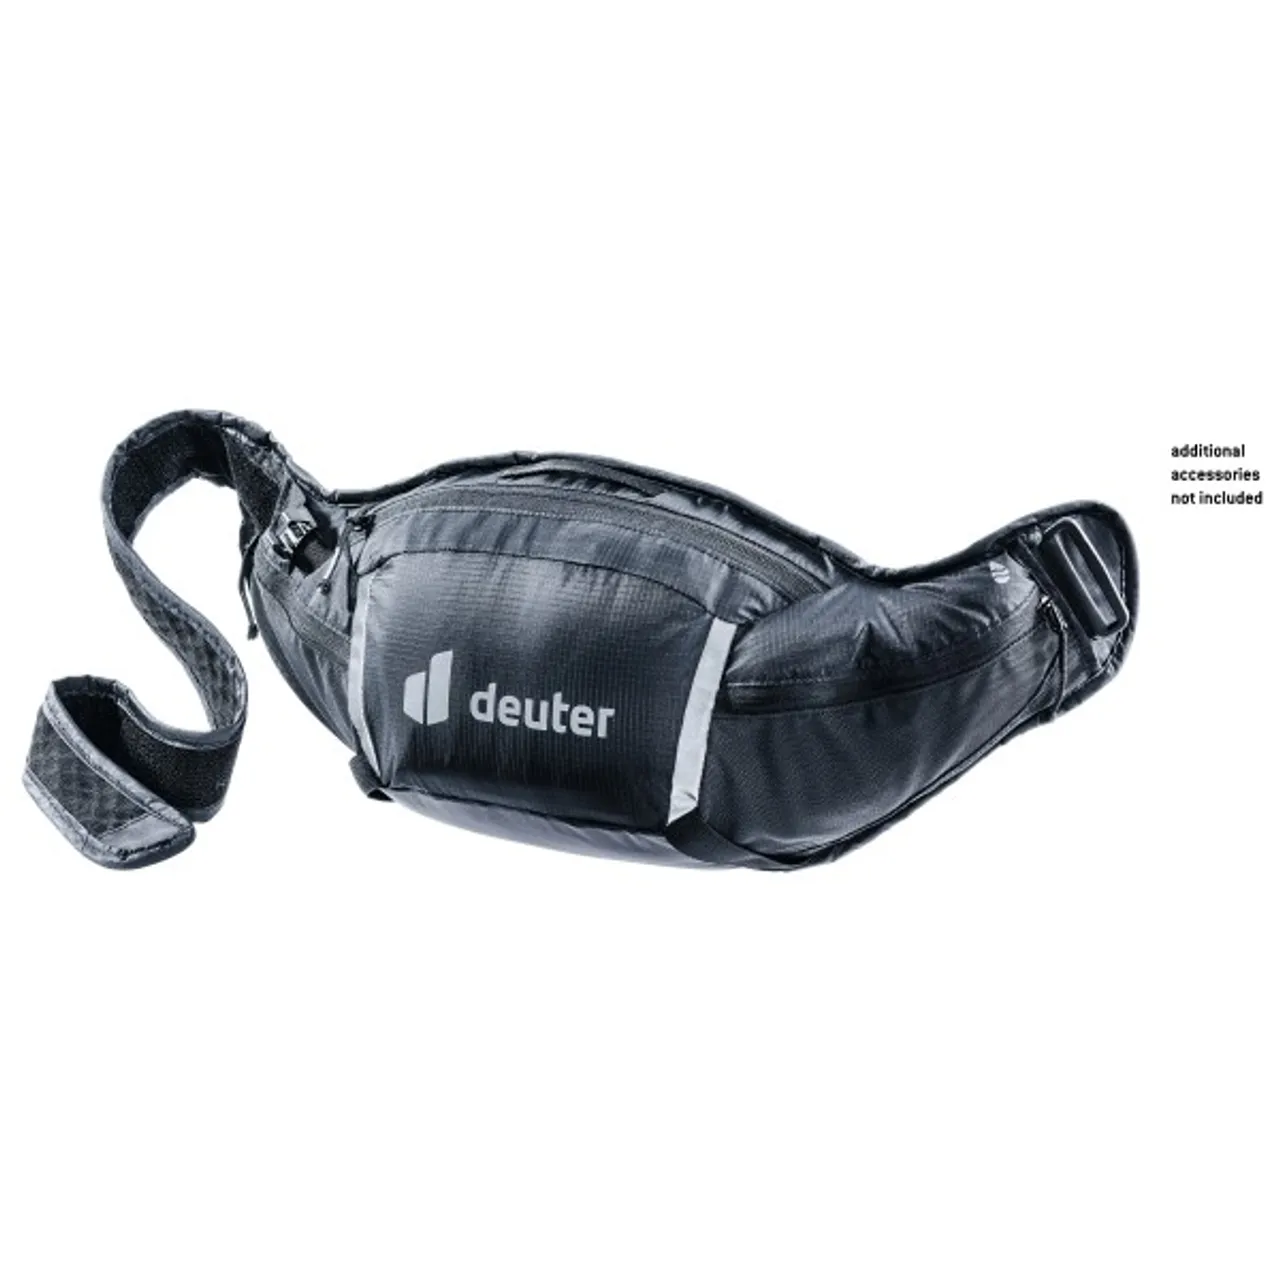 Deuter - Shortrail III - Hip bag size 3 l, blue/grey